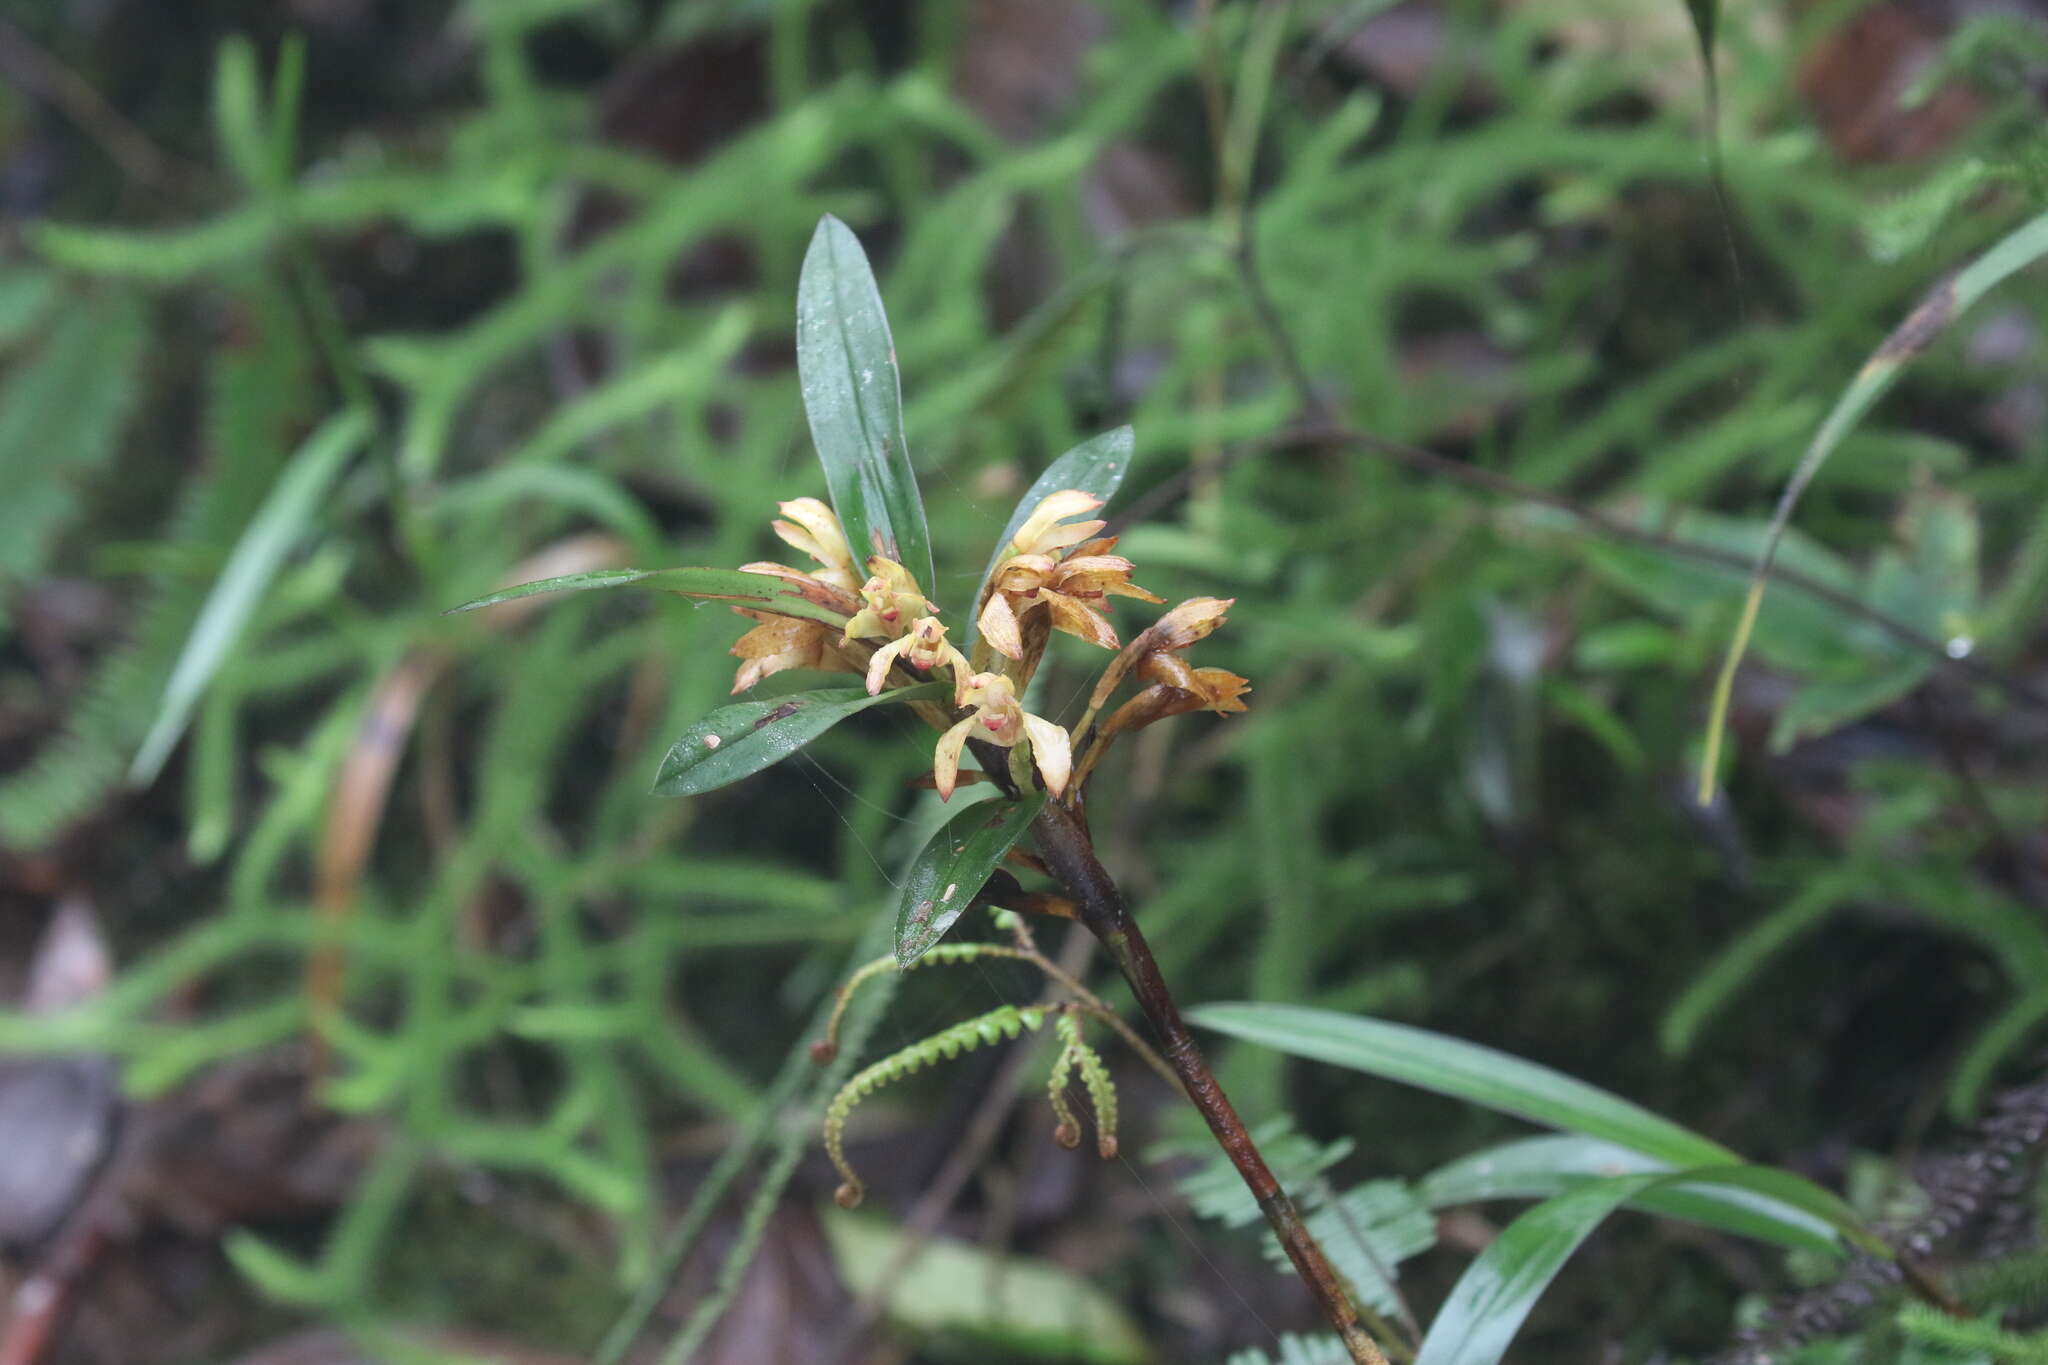 Image of Maxillaria embreei Dodson